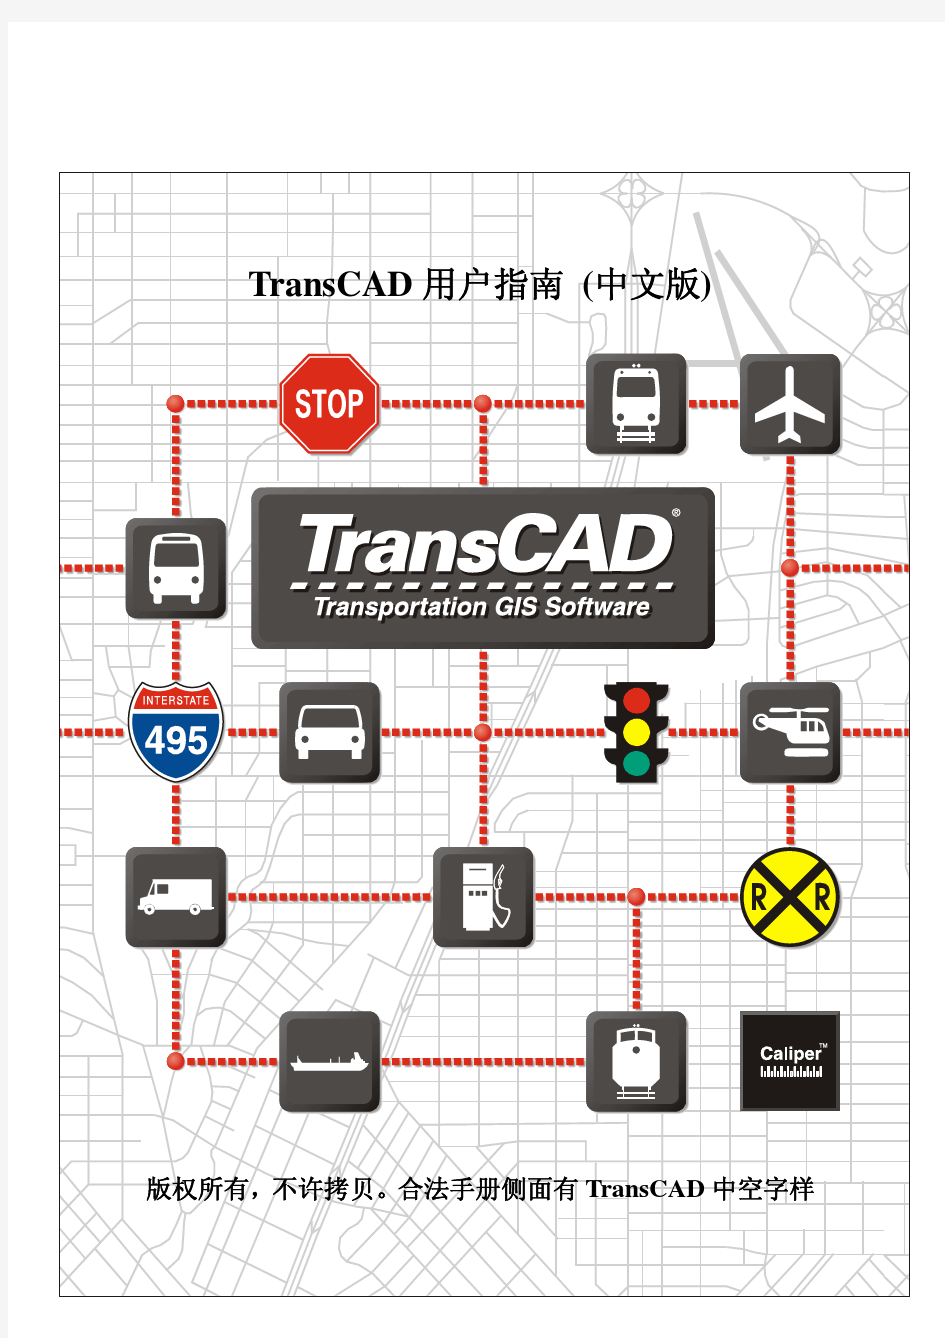 TransCAD 用户指南 (中文版)